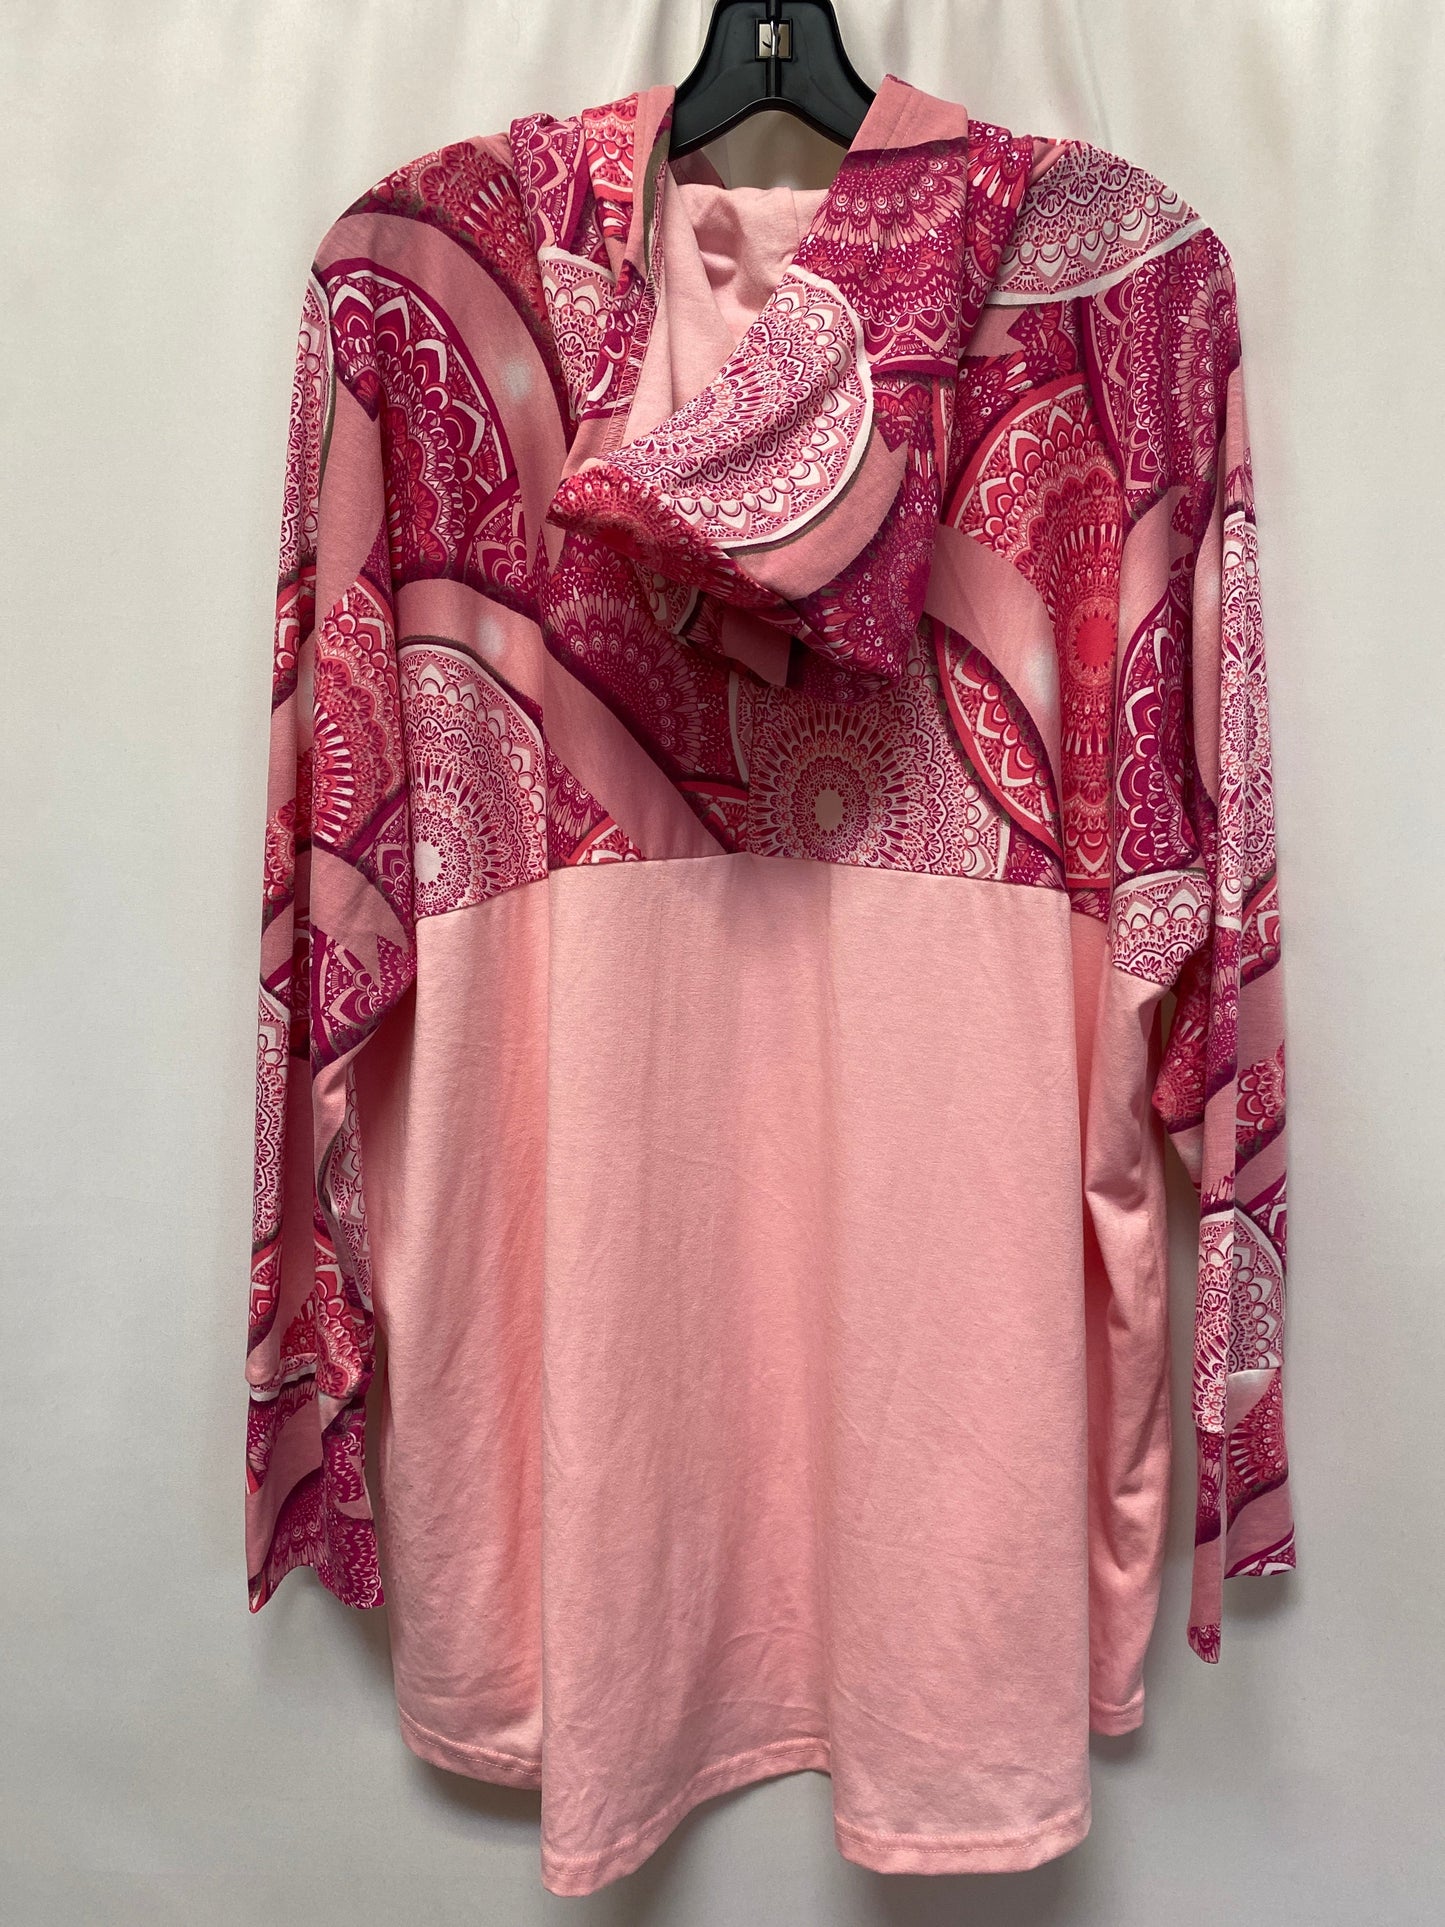 Pink Top Long Sleeve Lularoe, Size 3x